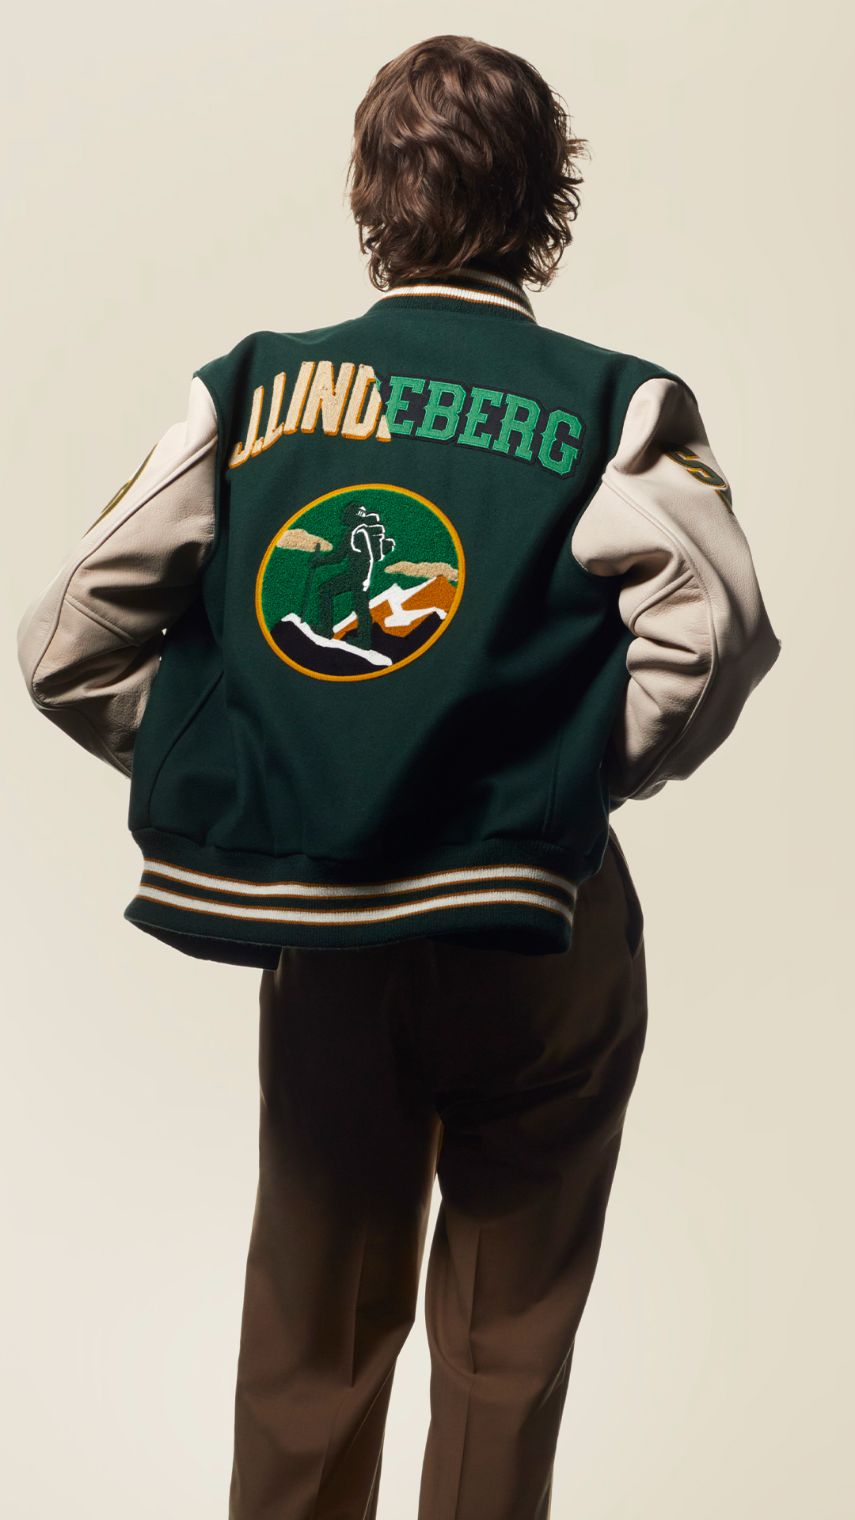 J.LINDEBERG Mens Fashion Outerwear